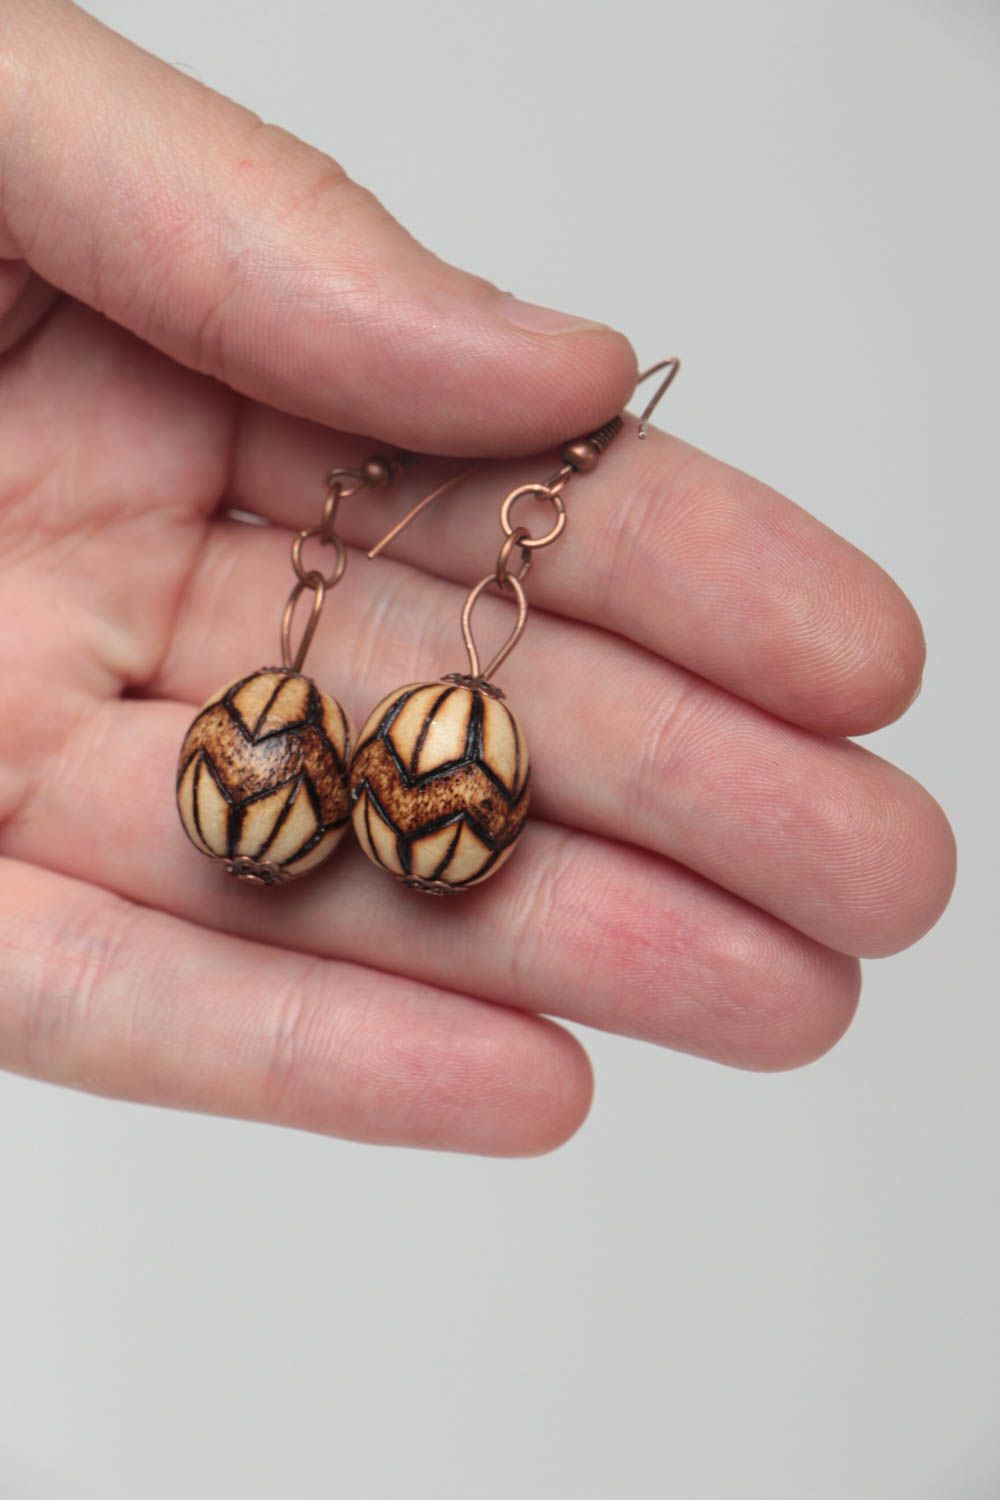 Handmade earrings wooden jewelry earrings for women fashion jewelry gift for her photo 5